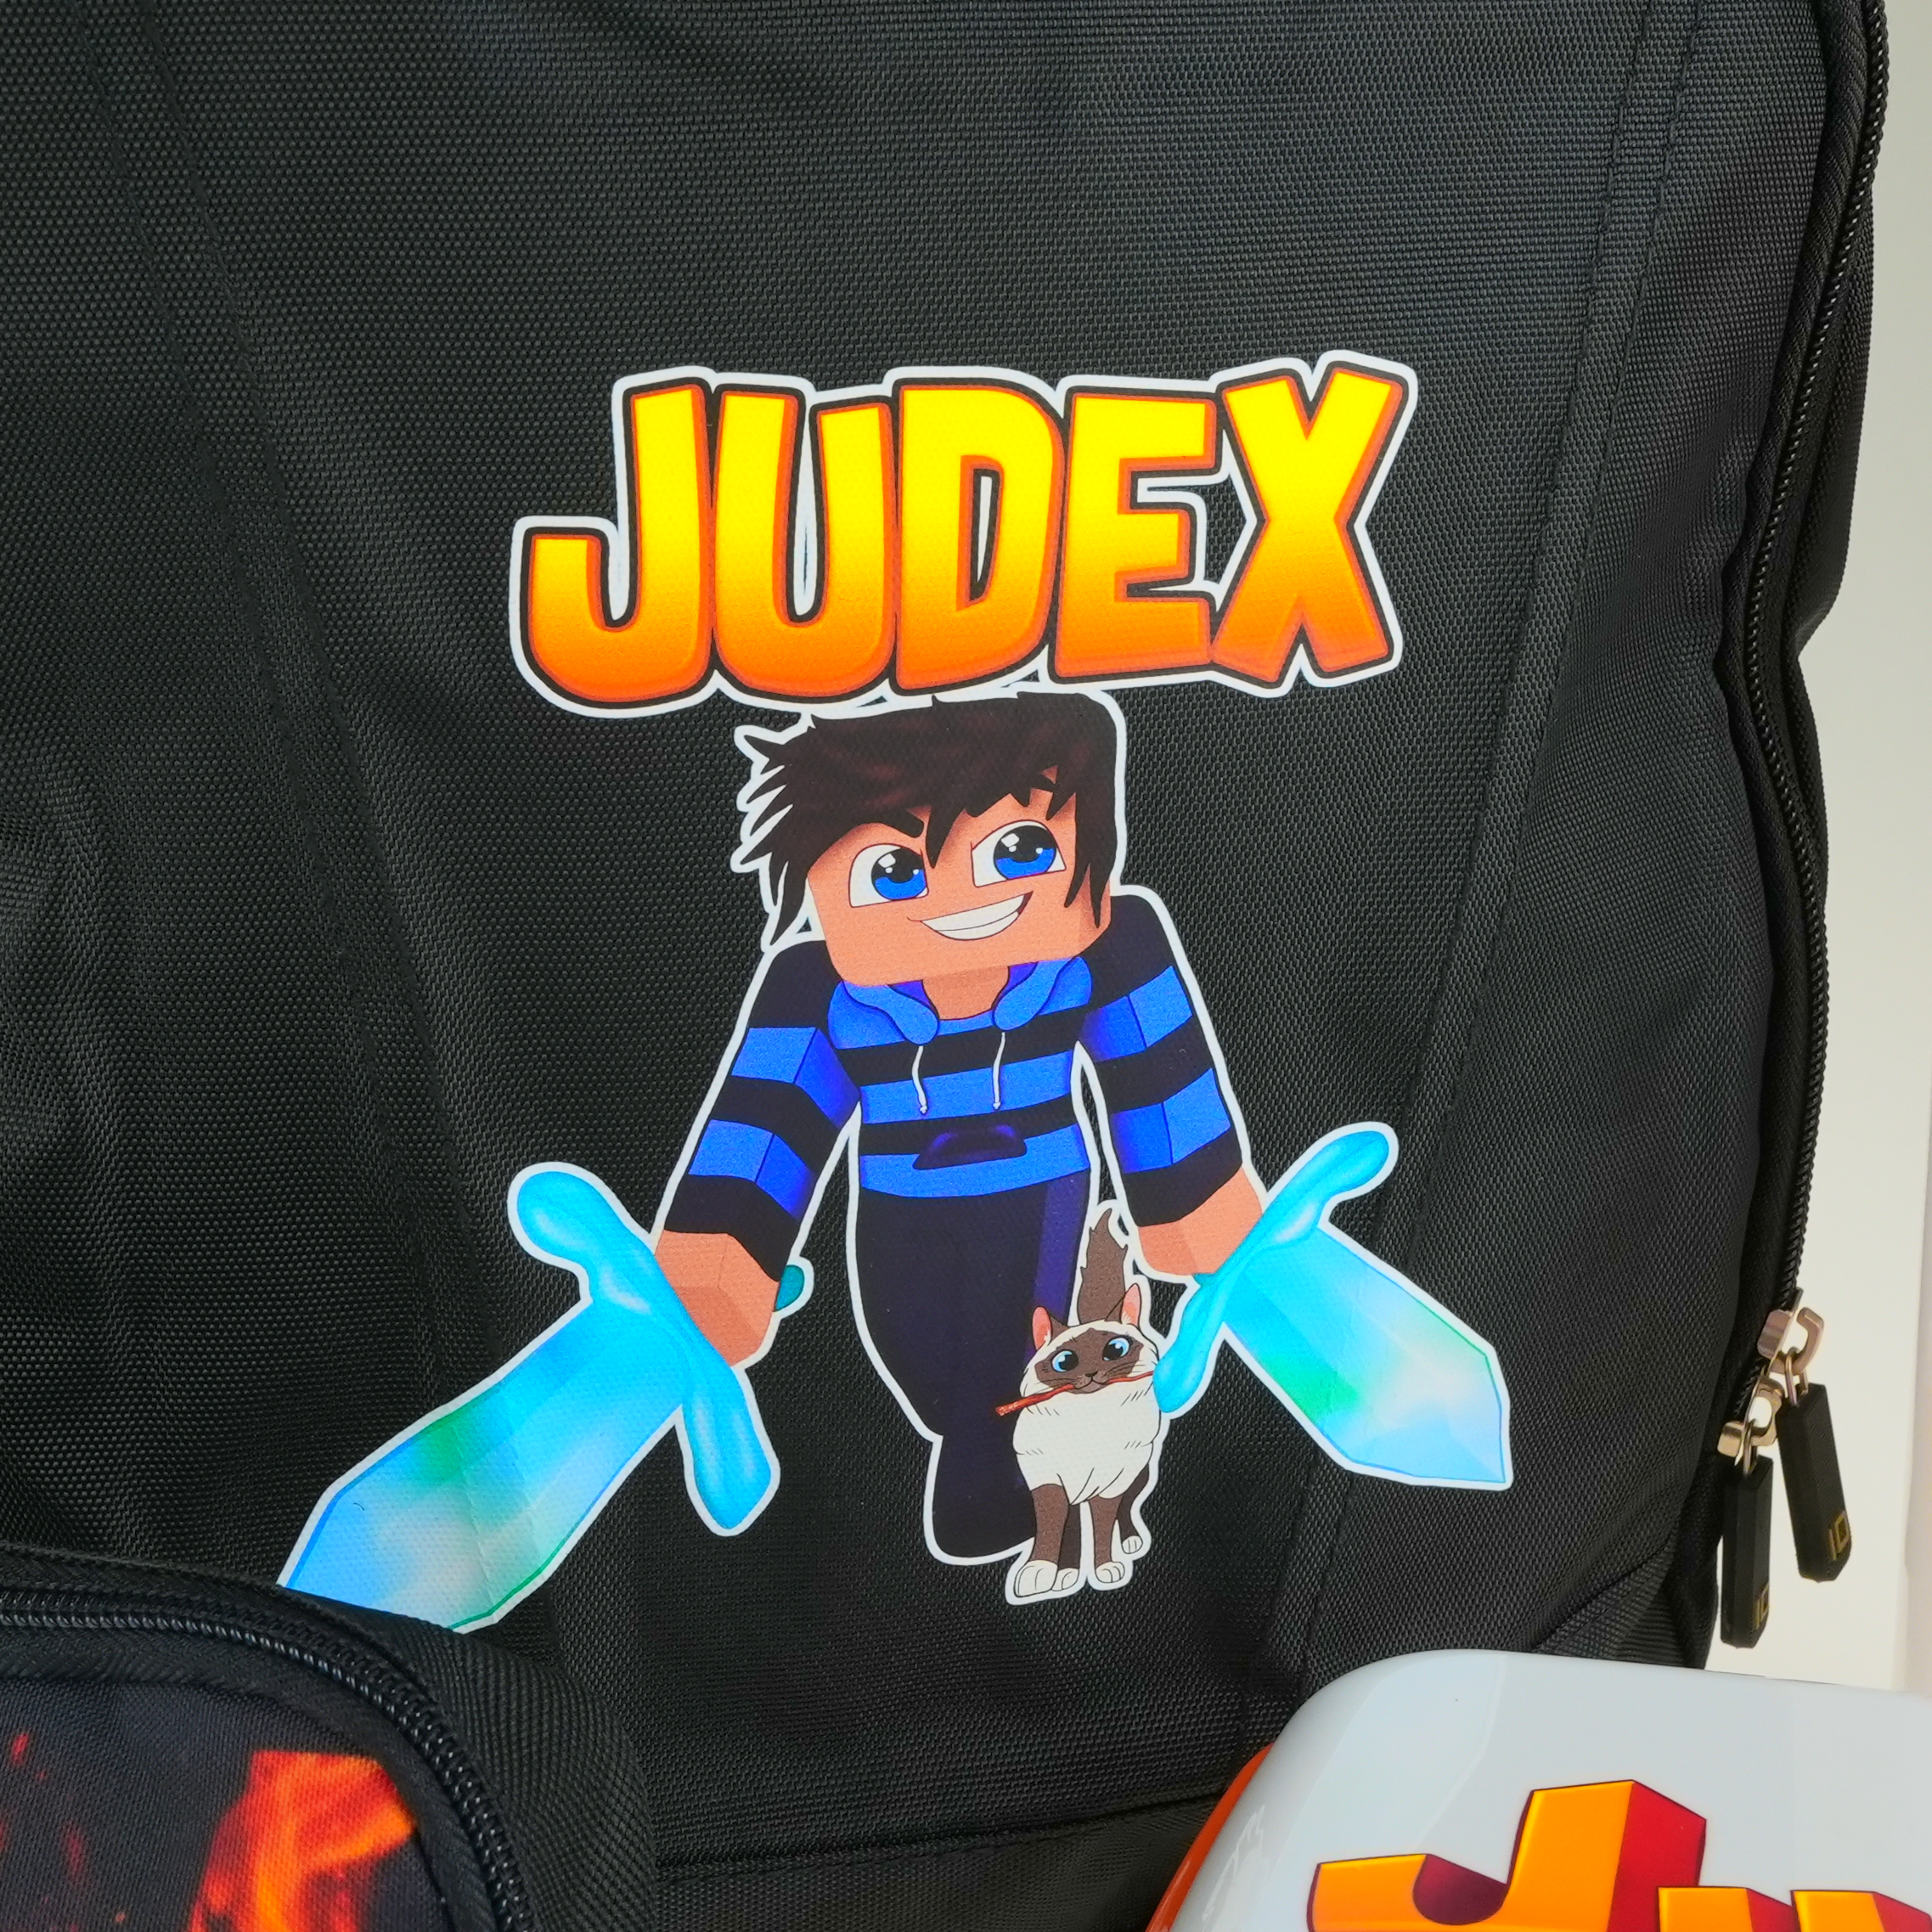 Judex Middle Skolstart Bundle